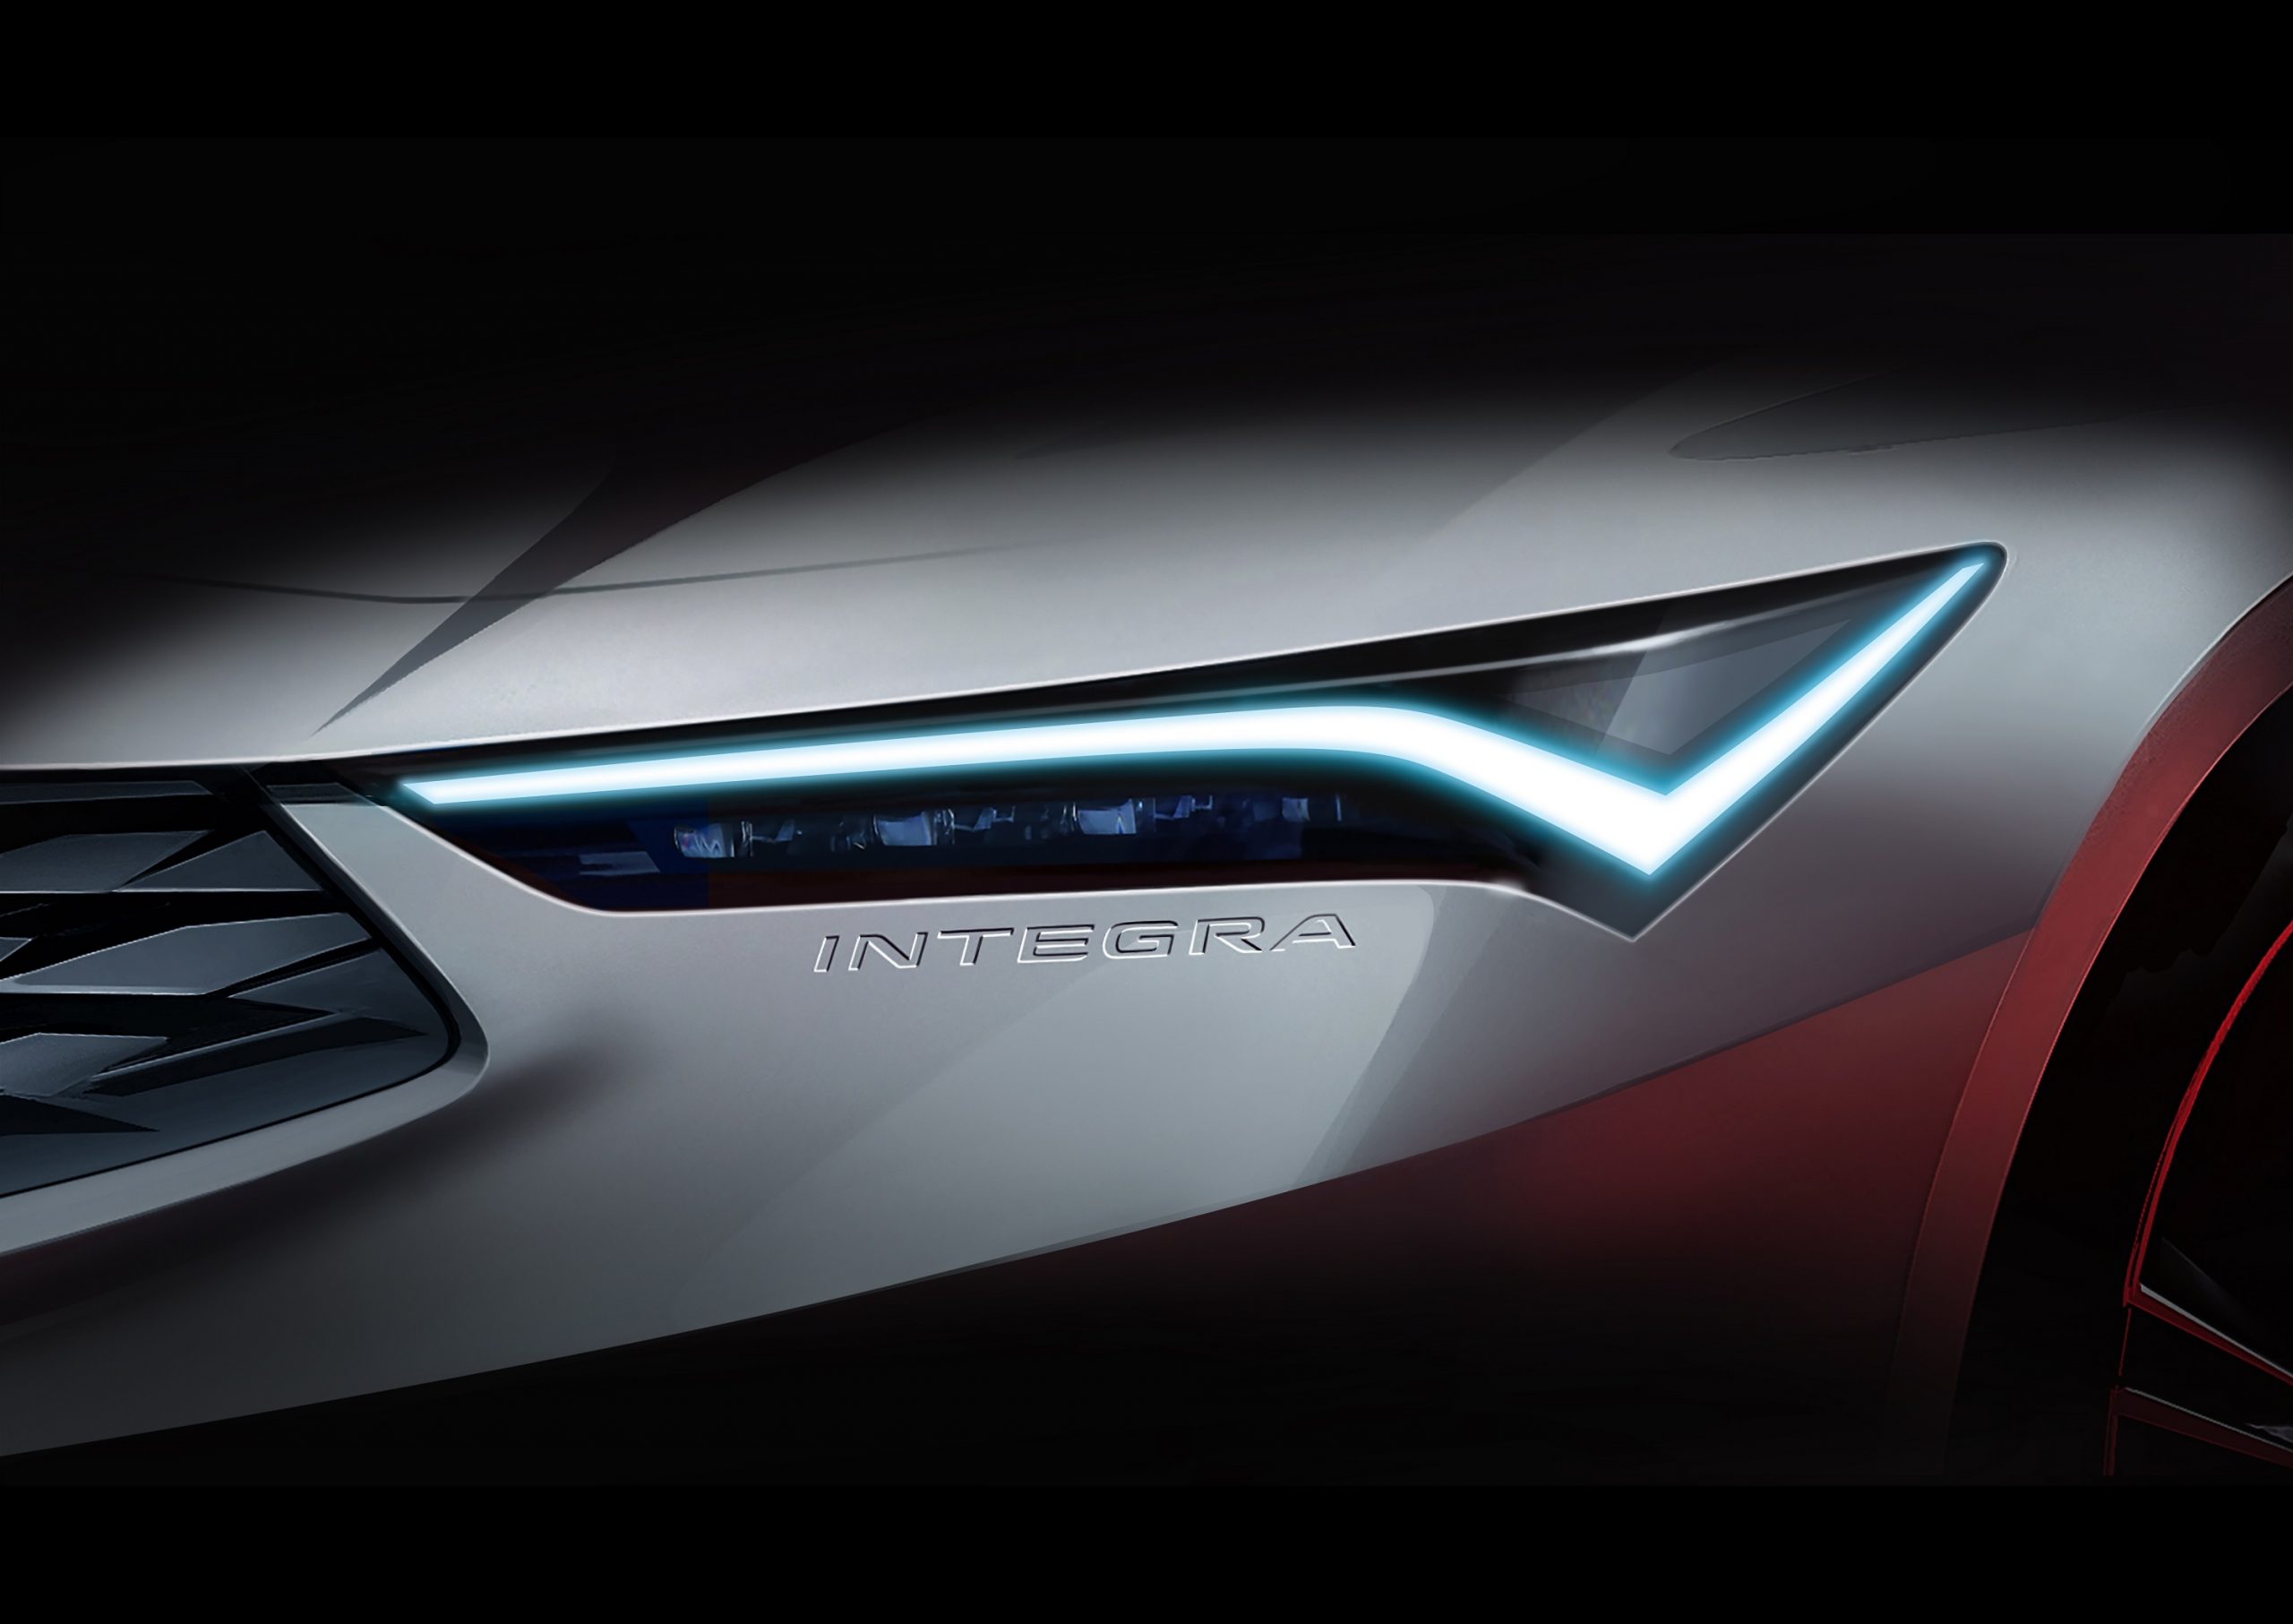 The headlight of the white 2022 Acura Integra